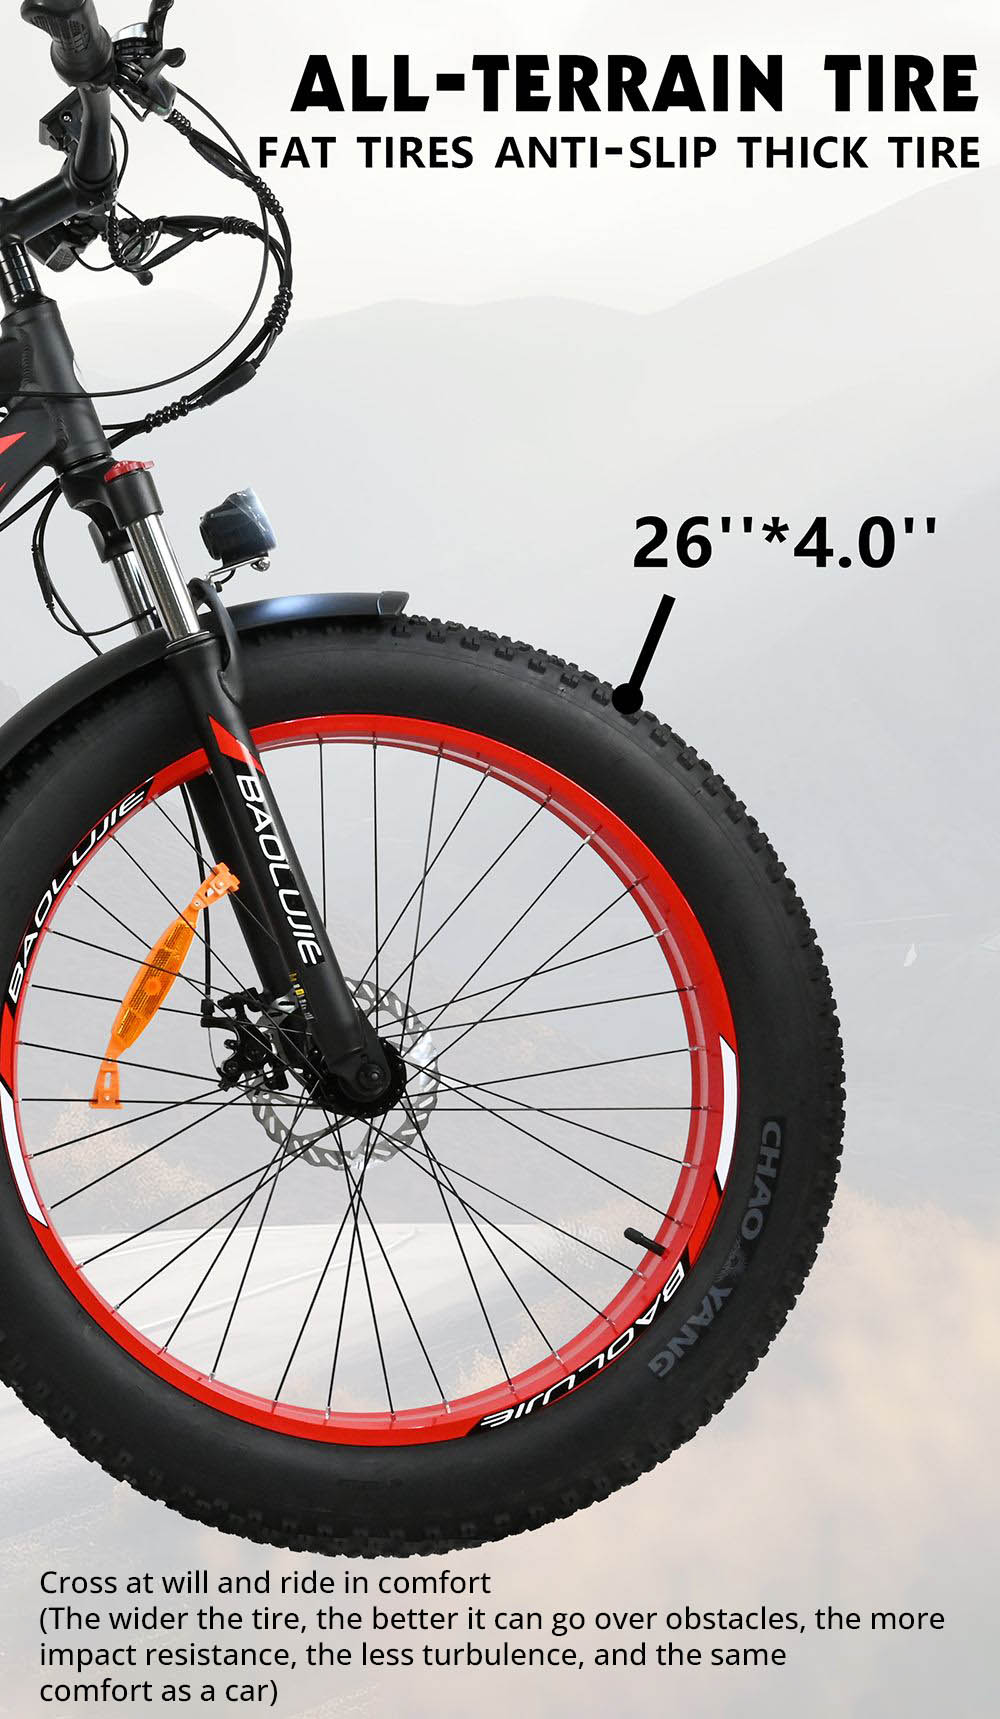 Bicicleta eléctrica BAOLUJIE DP2619, neumático grueso de 26 * 4.0 pulgadas, motor de 750 W, batería de 48 V, 13 Ah, velocidad máxima de 45 km / h, alcance máximo de 45 km, pantalla LCD SHIMANO de 7 velocidades - Gris